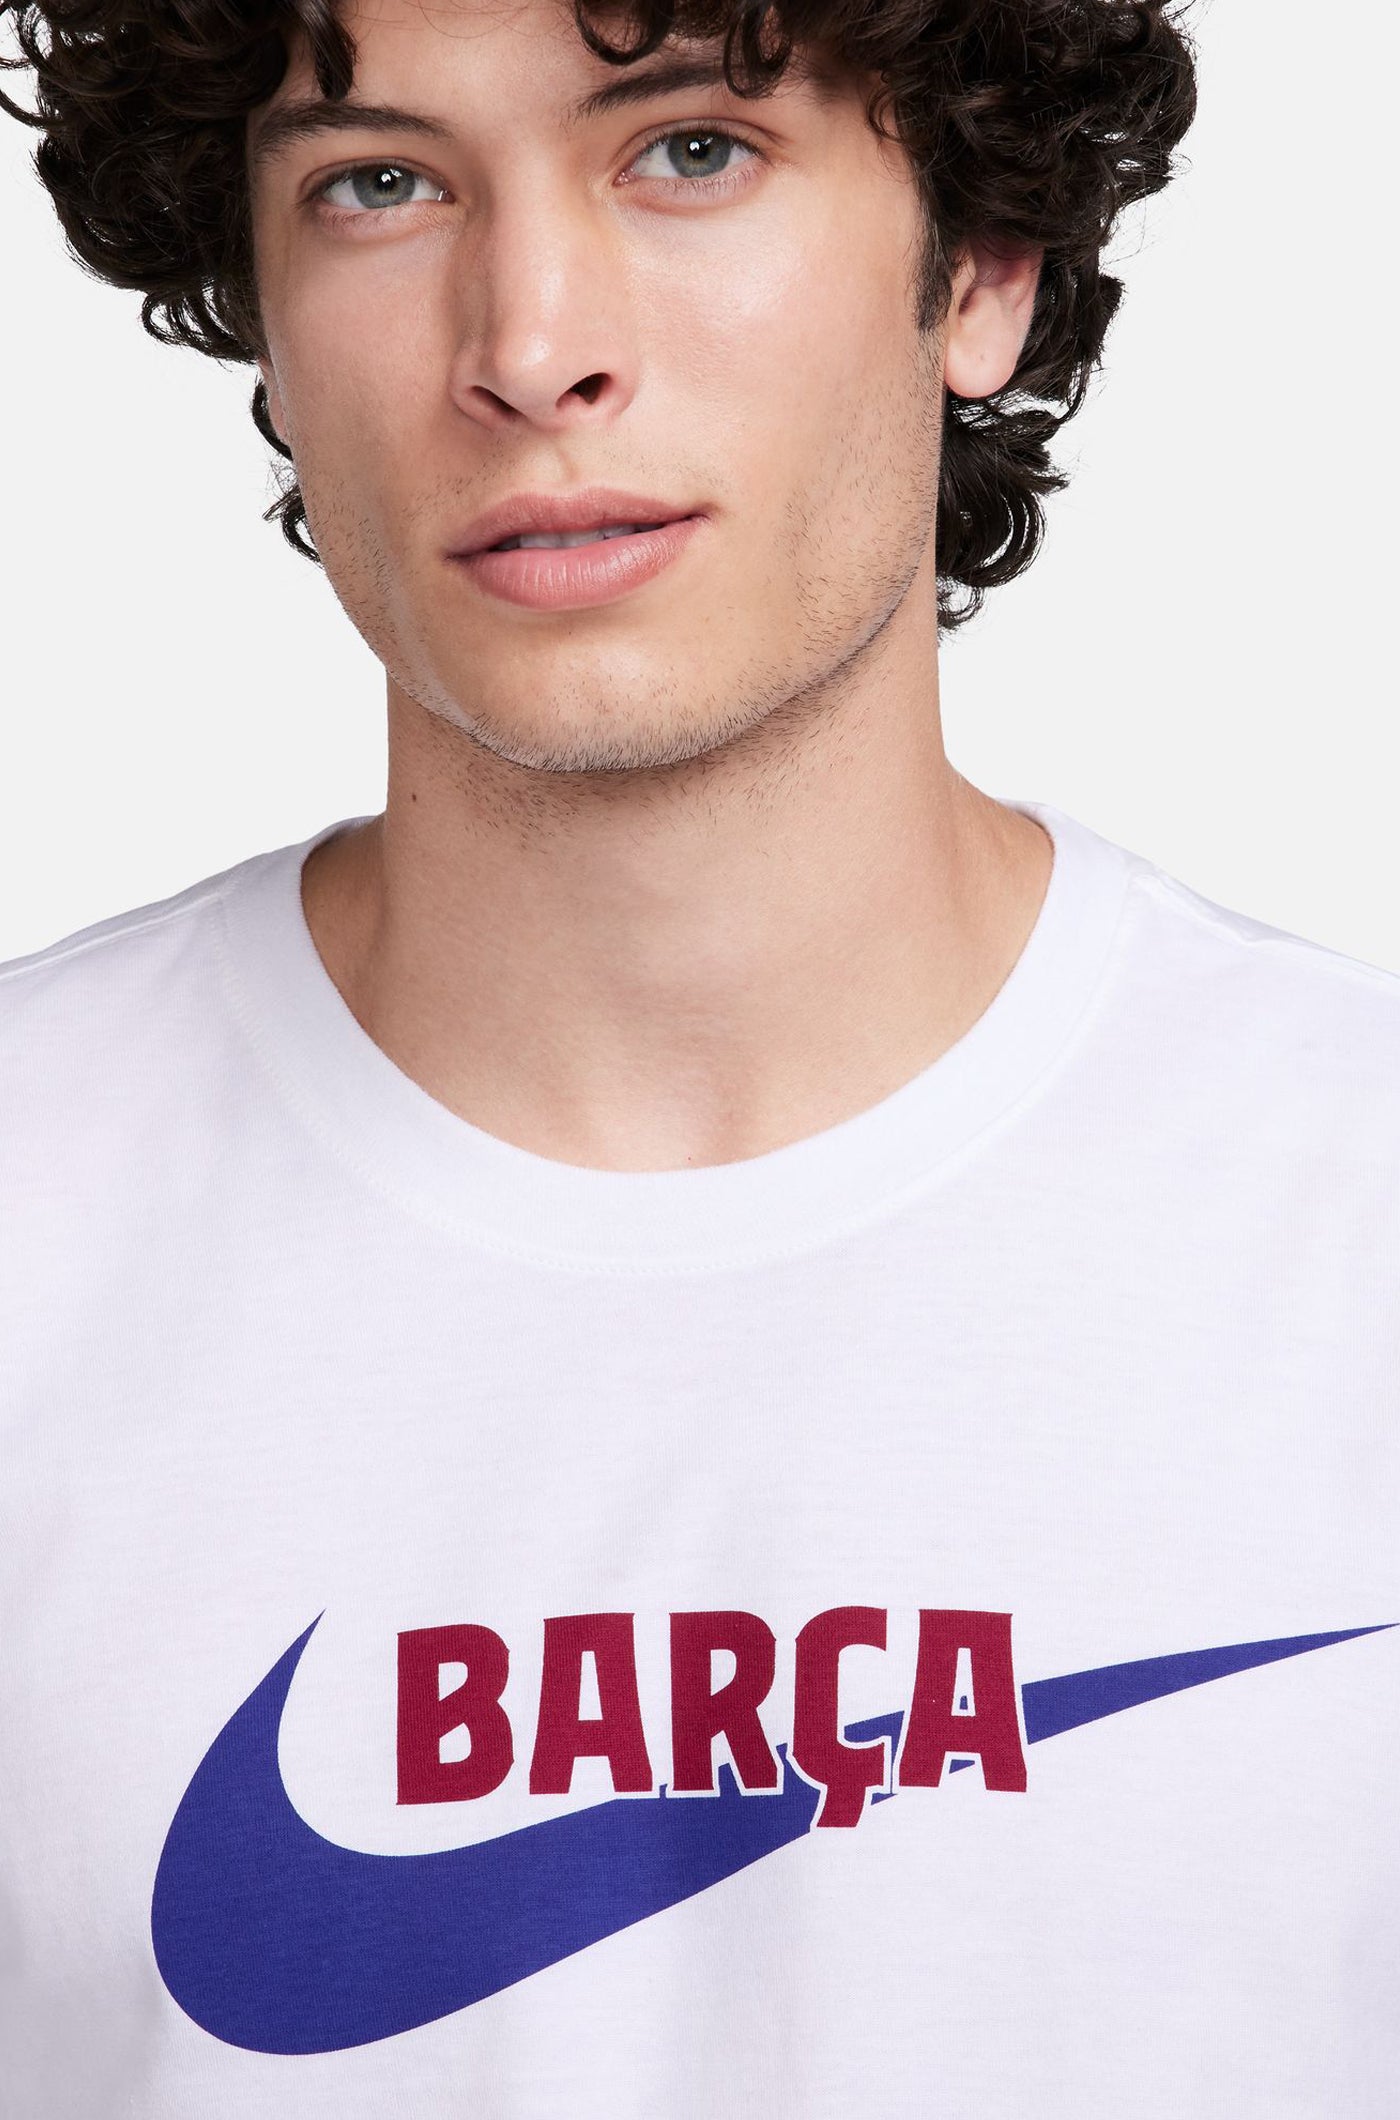 Maillot blanc Barça Nike